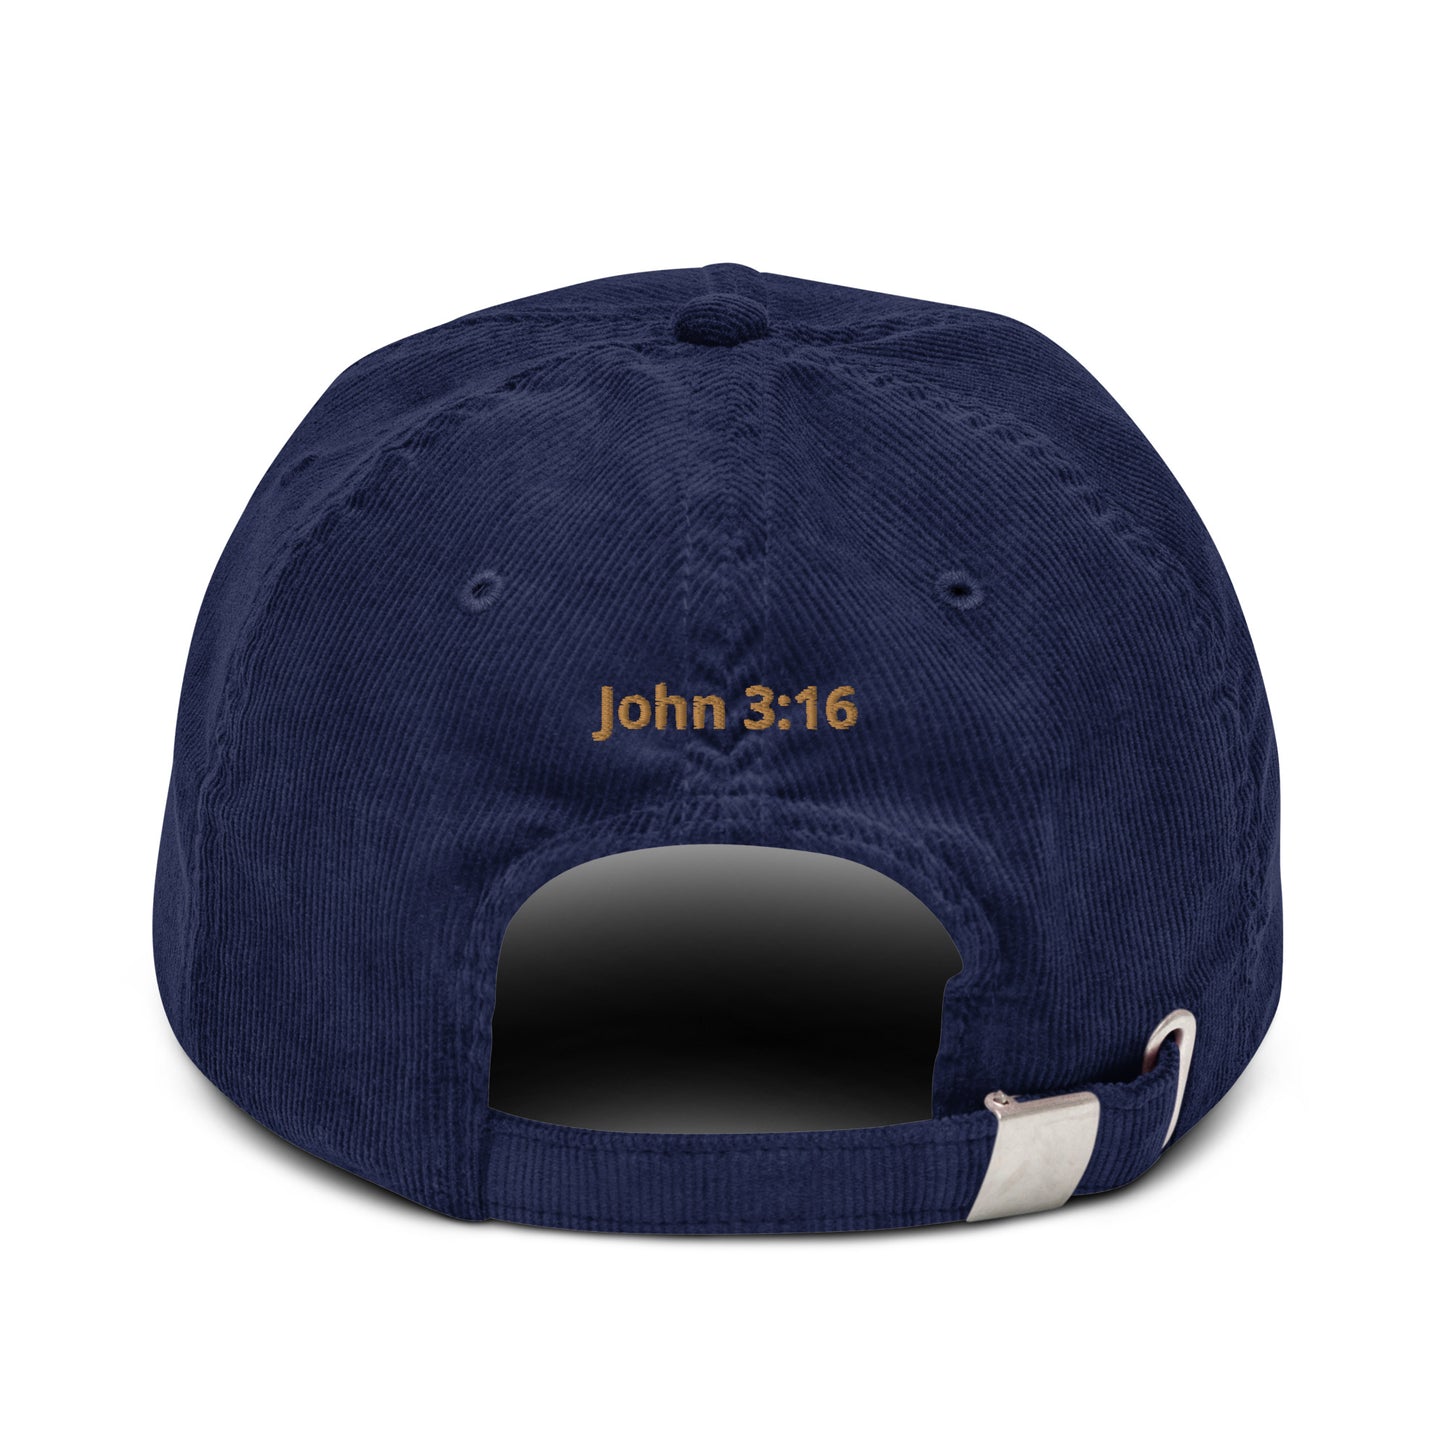 God Said "John 3"16" Corduroy hat